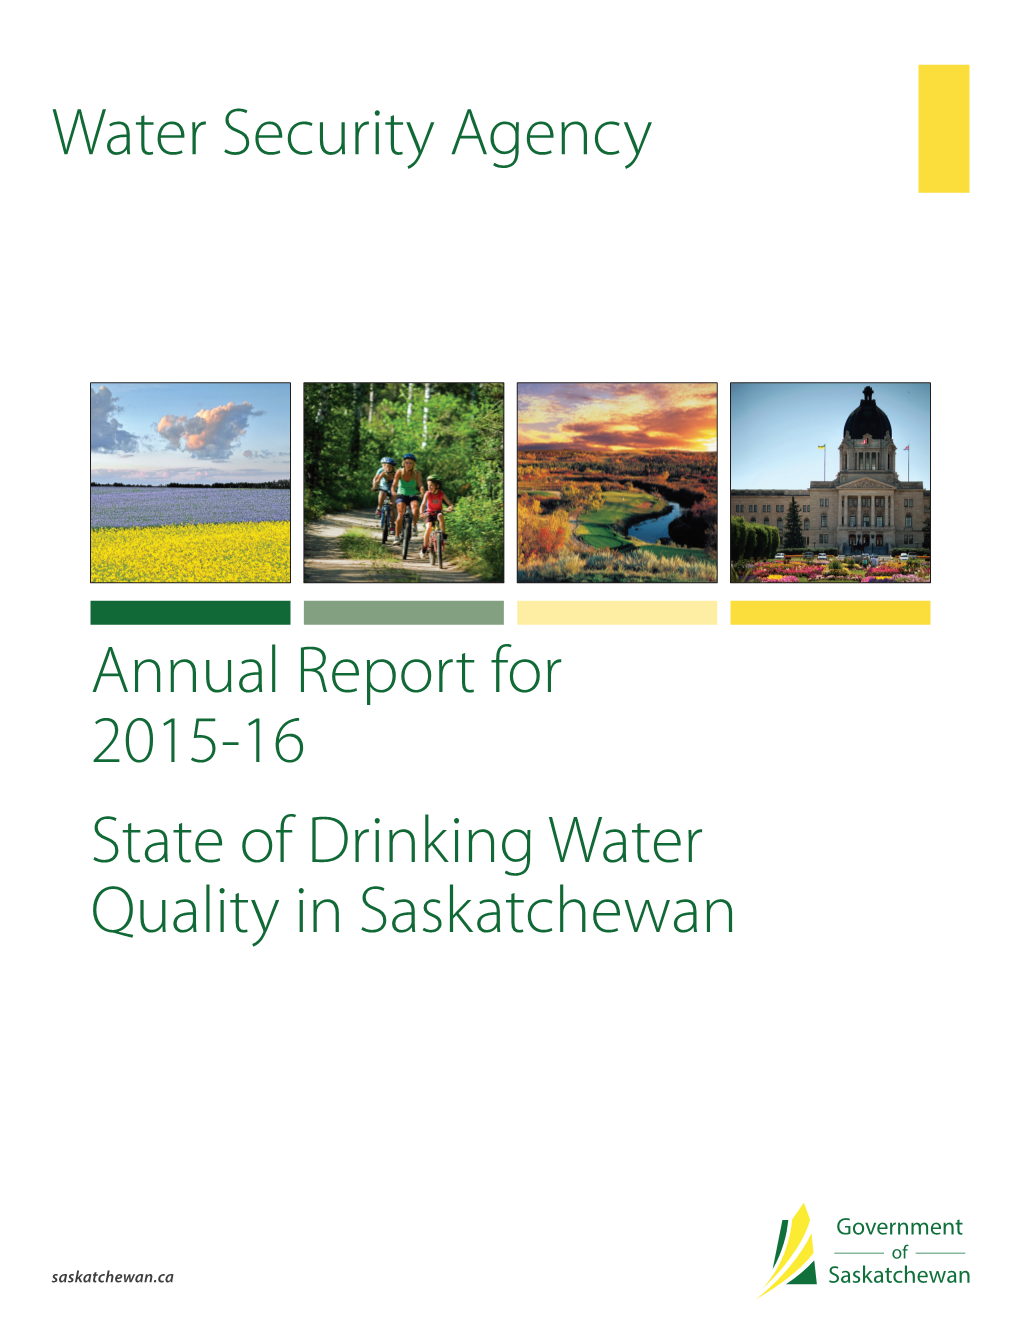 2015-16 State of Drinking Water Quality in Saskatchewan